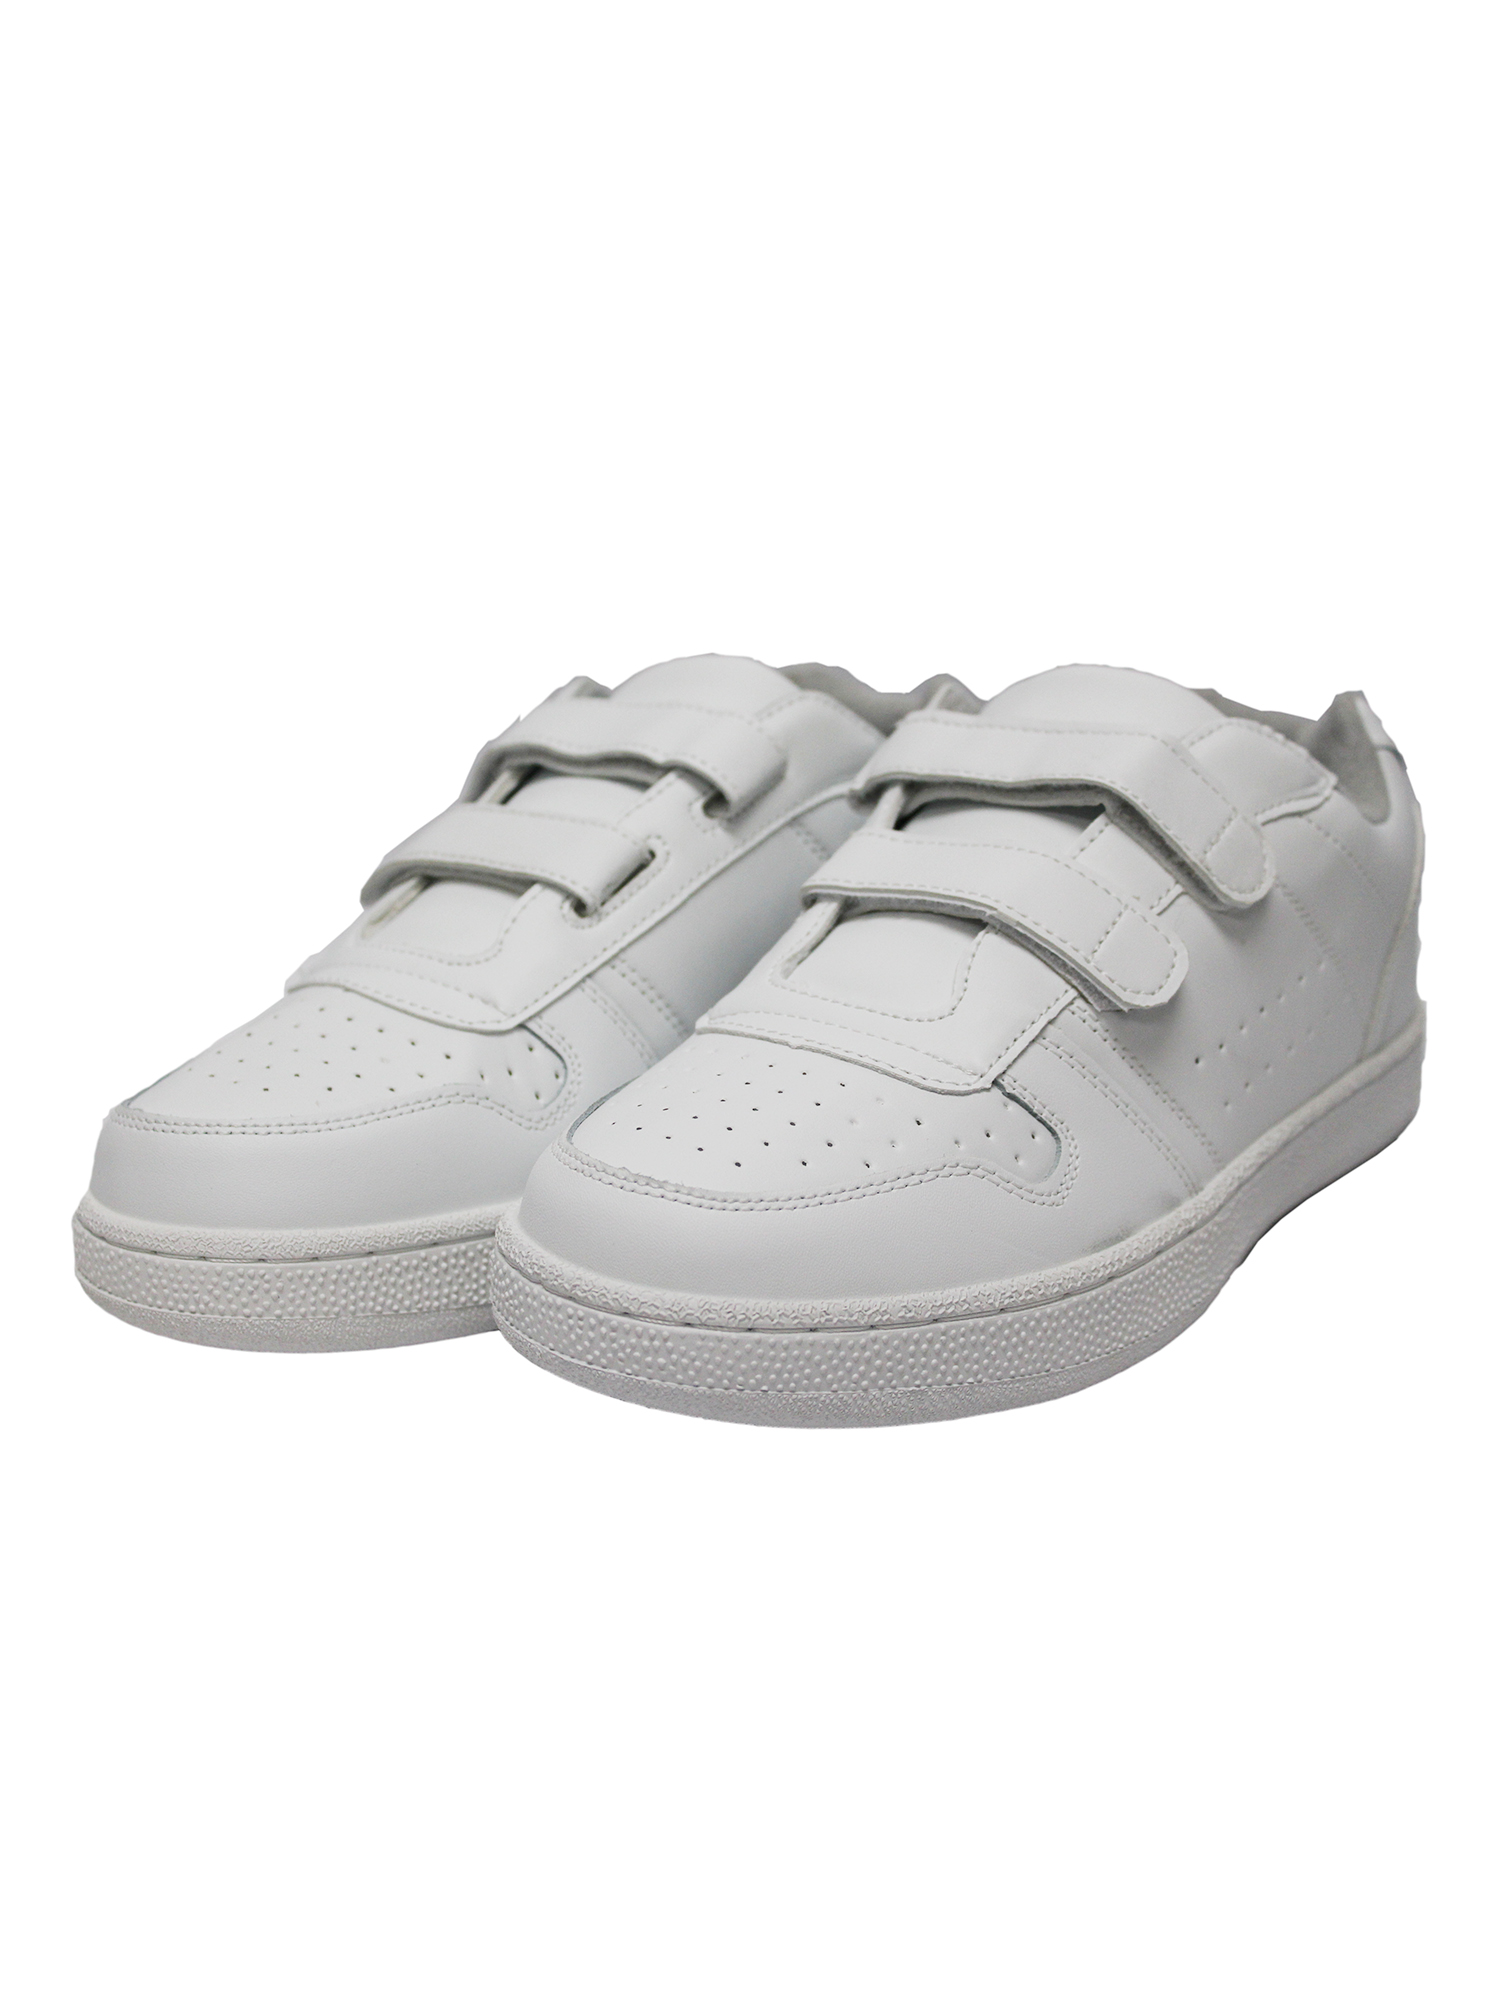 Tanleewa Men's Leather Strap Sneakers Lightweight Hook and Loop Walking Shoe Size 15 Adult Male - image 2 of 5